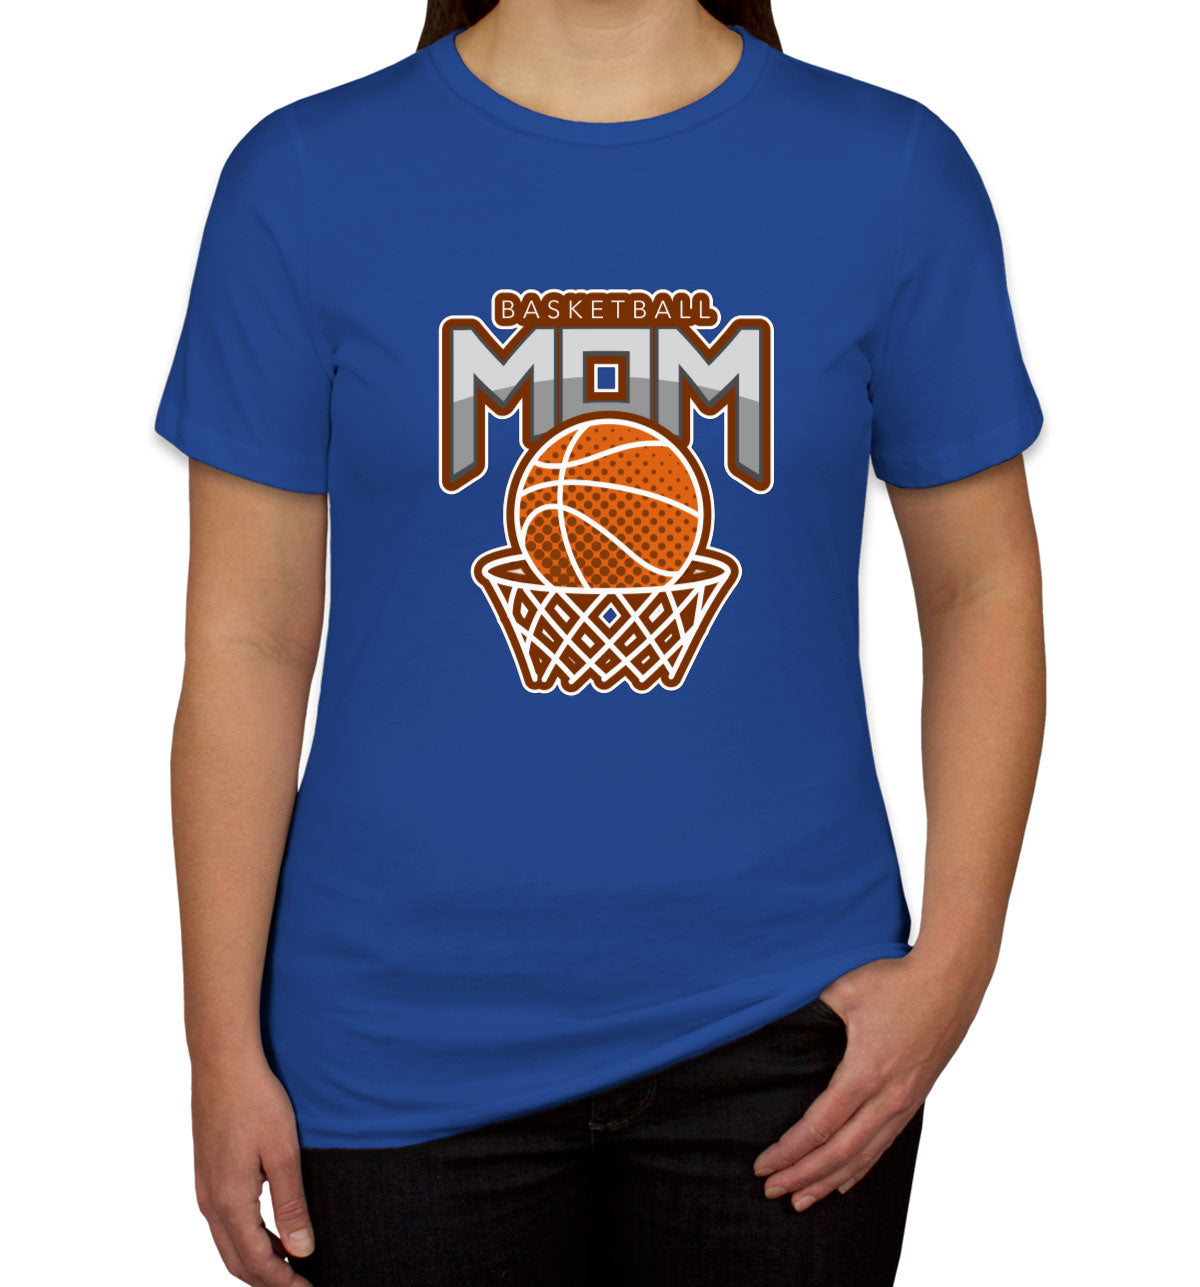 Basketball Mom Women's T-shirt